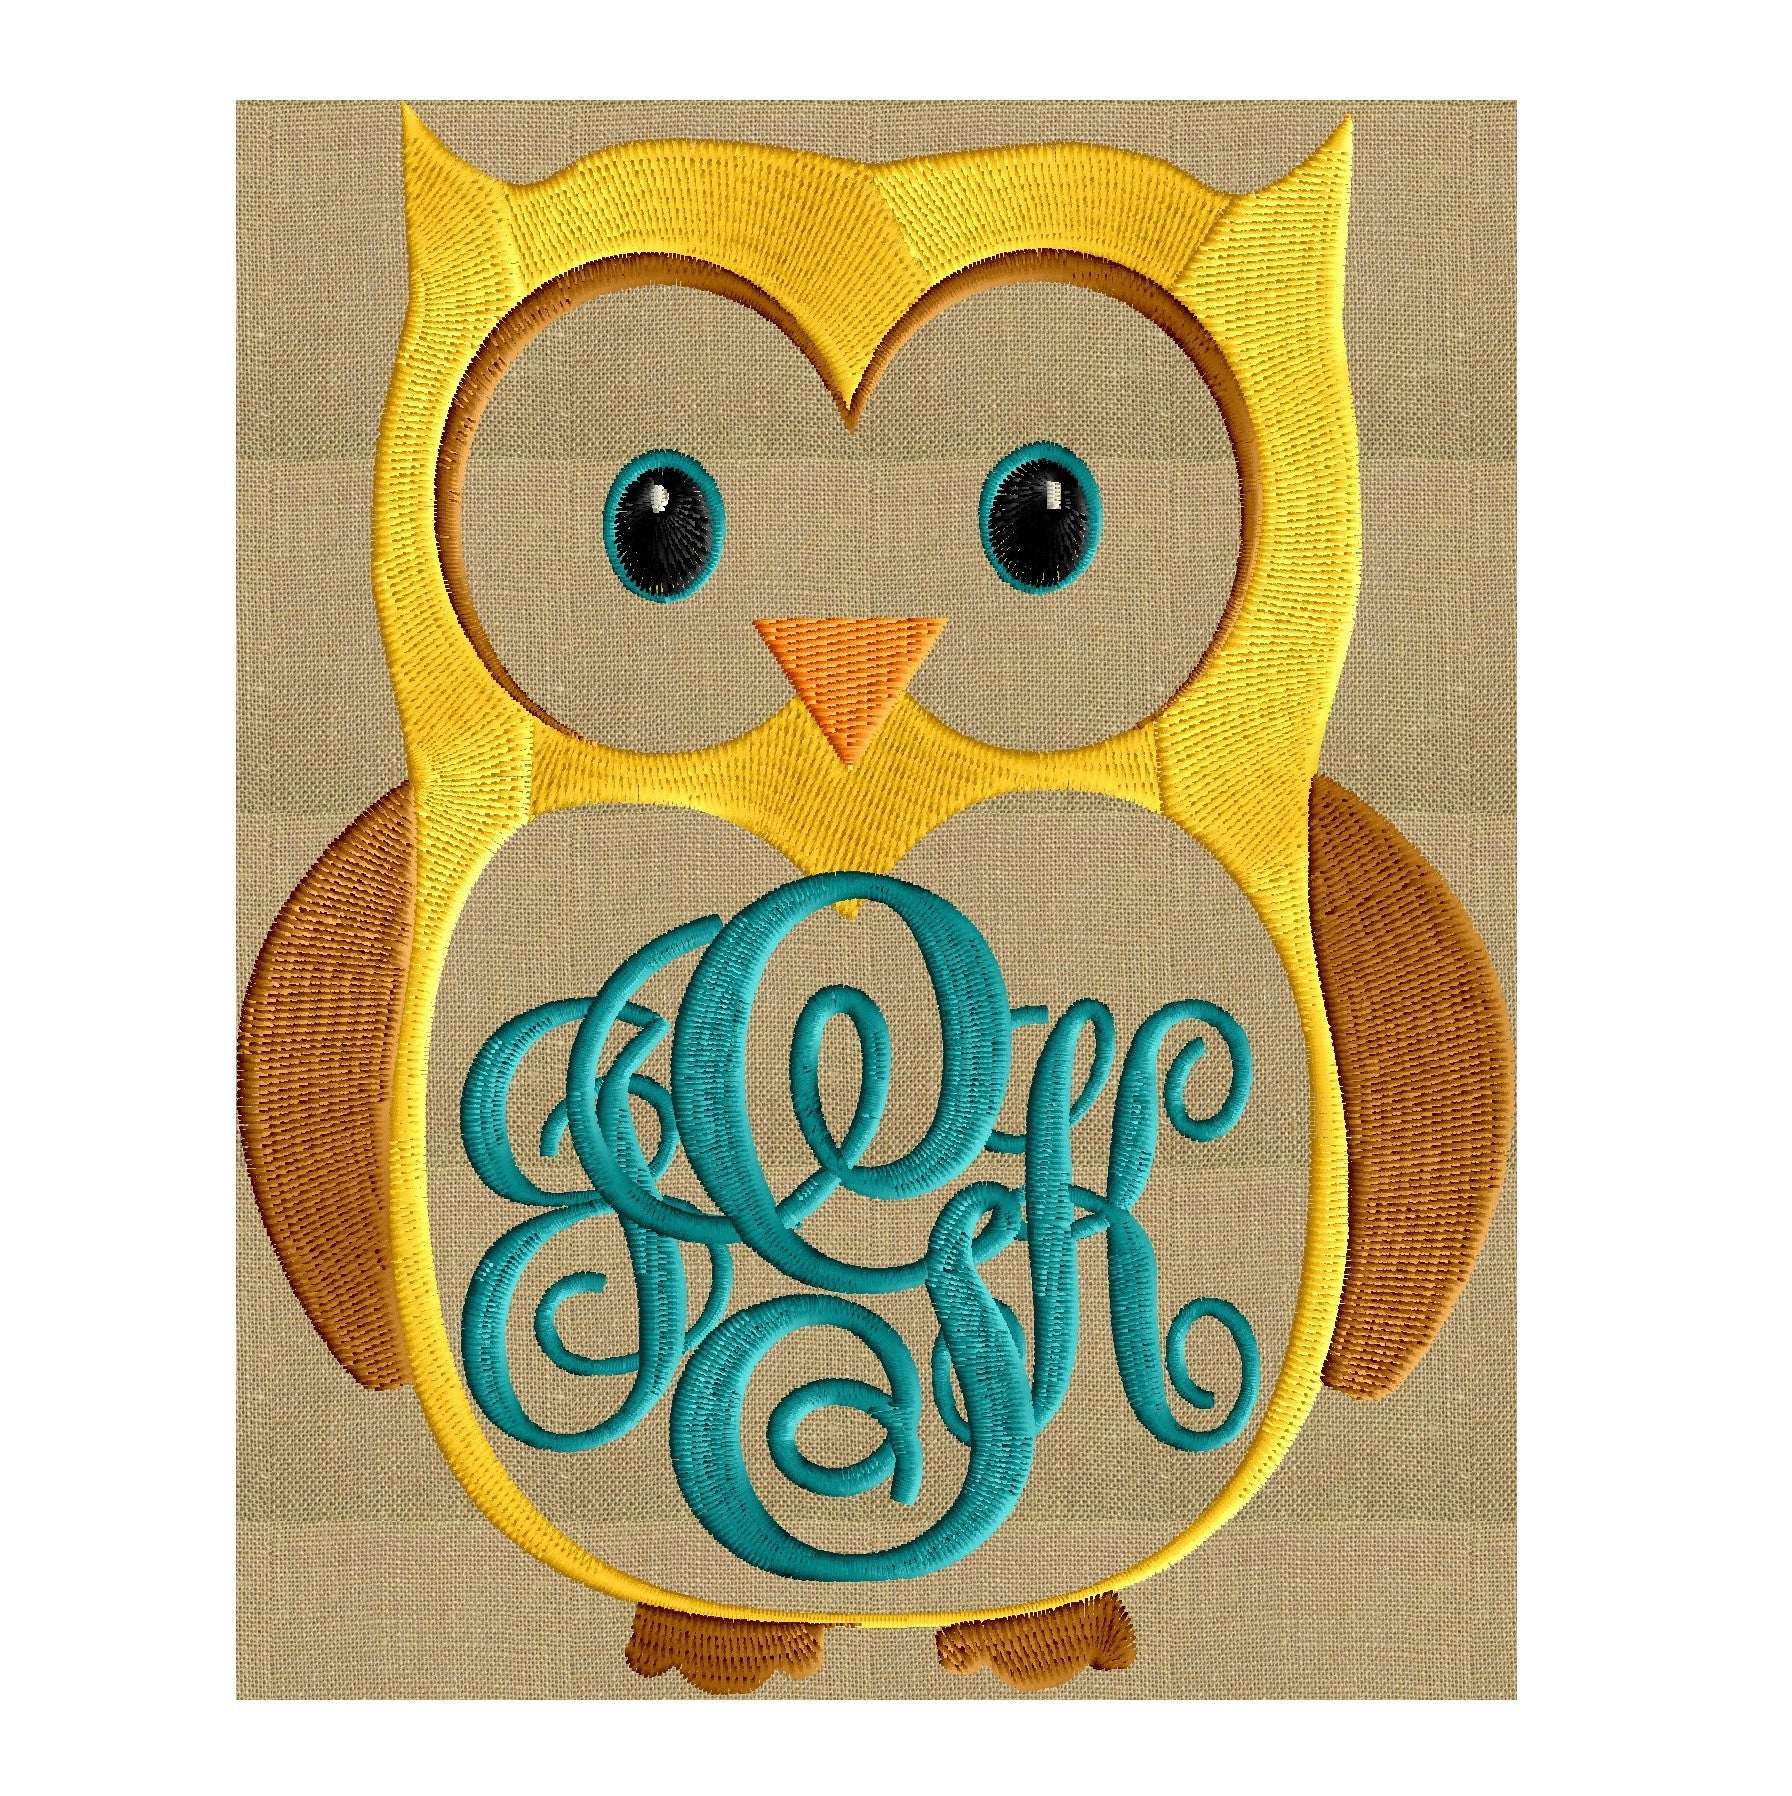 Owl Frame Design - EMBROIDERY DESIGN FILE - Instant download animals